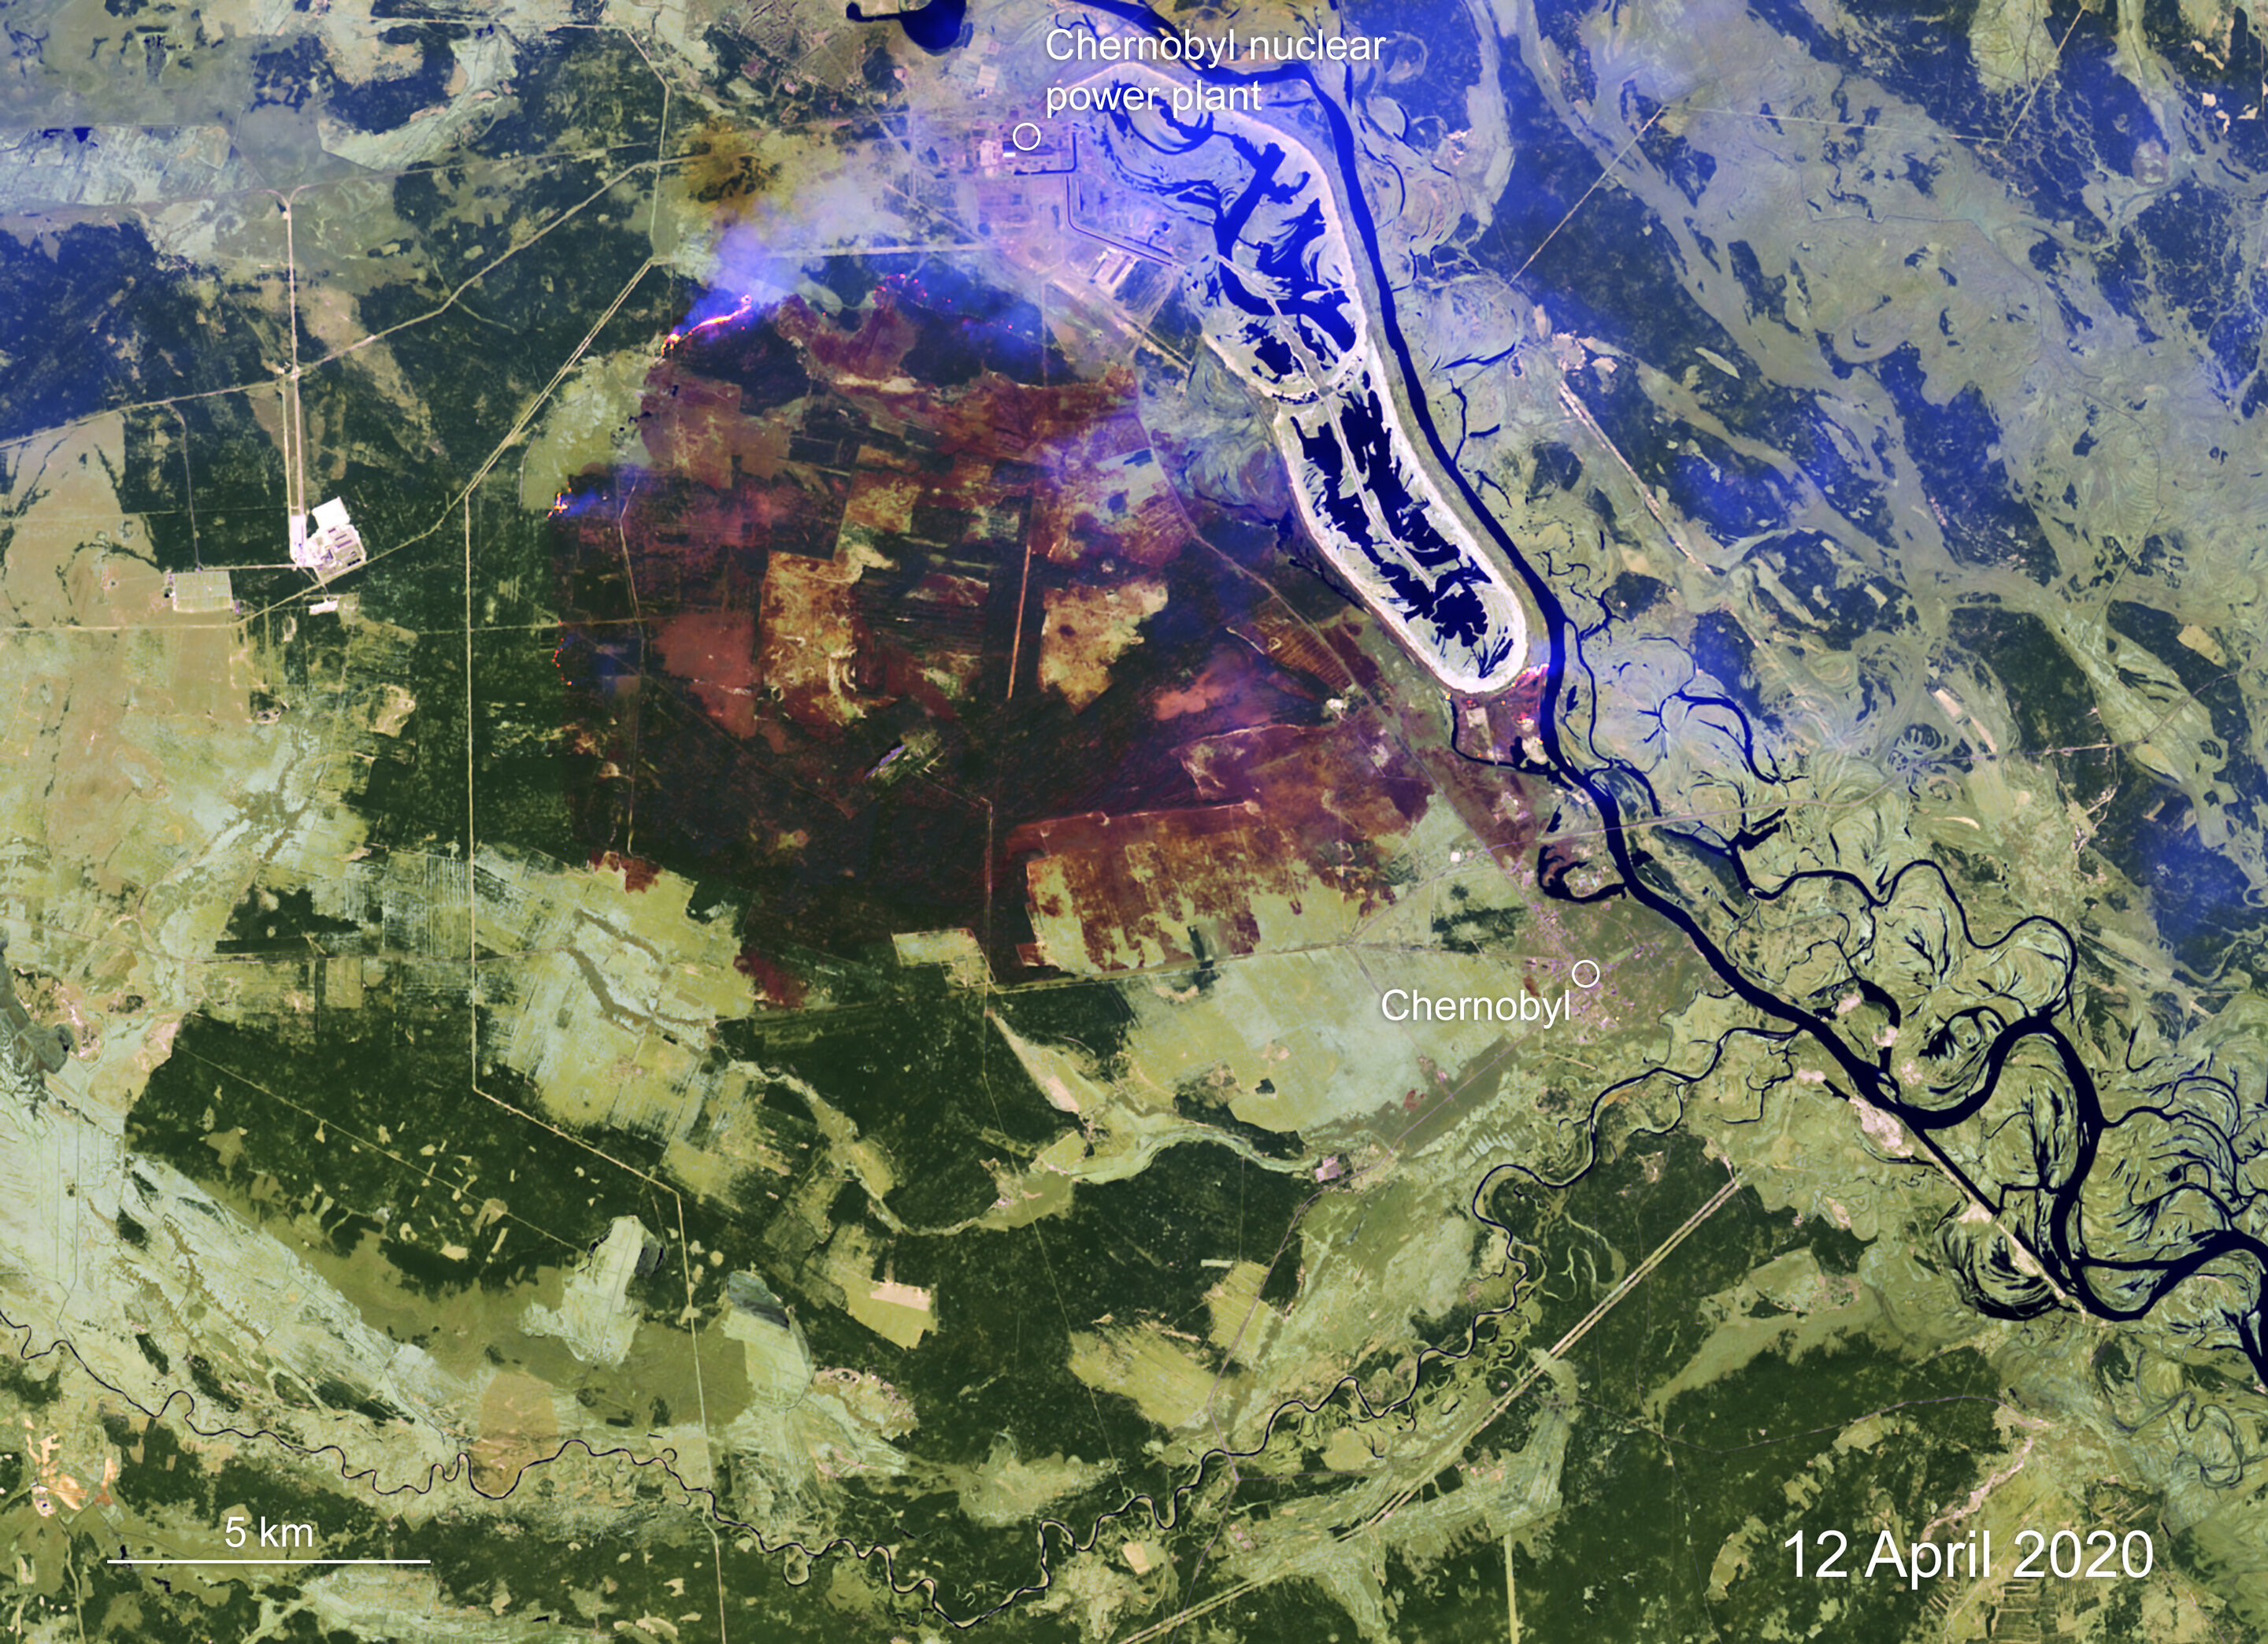 Chernobyl Power Plant Google Maps Maps Images